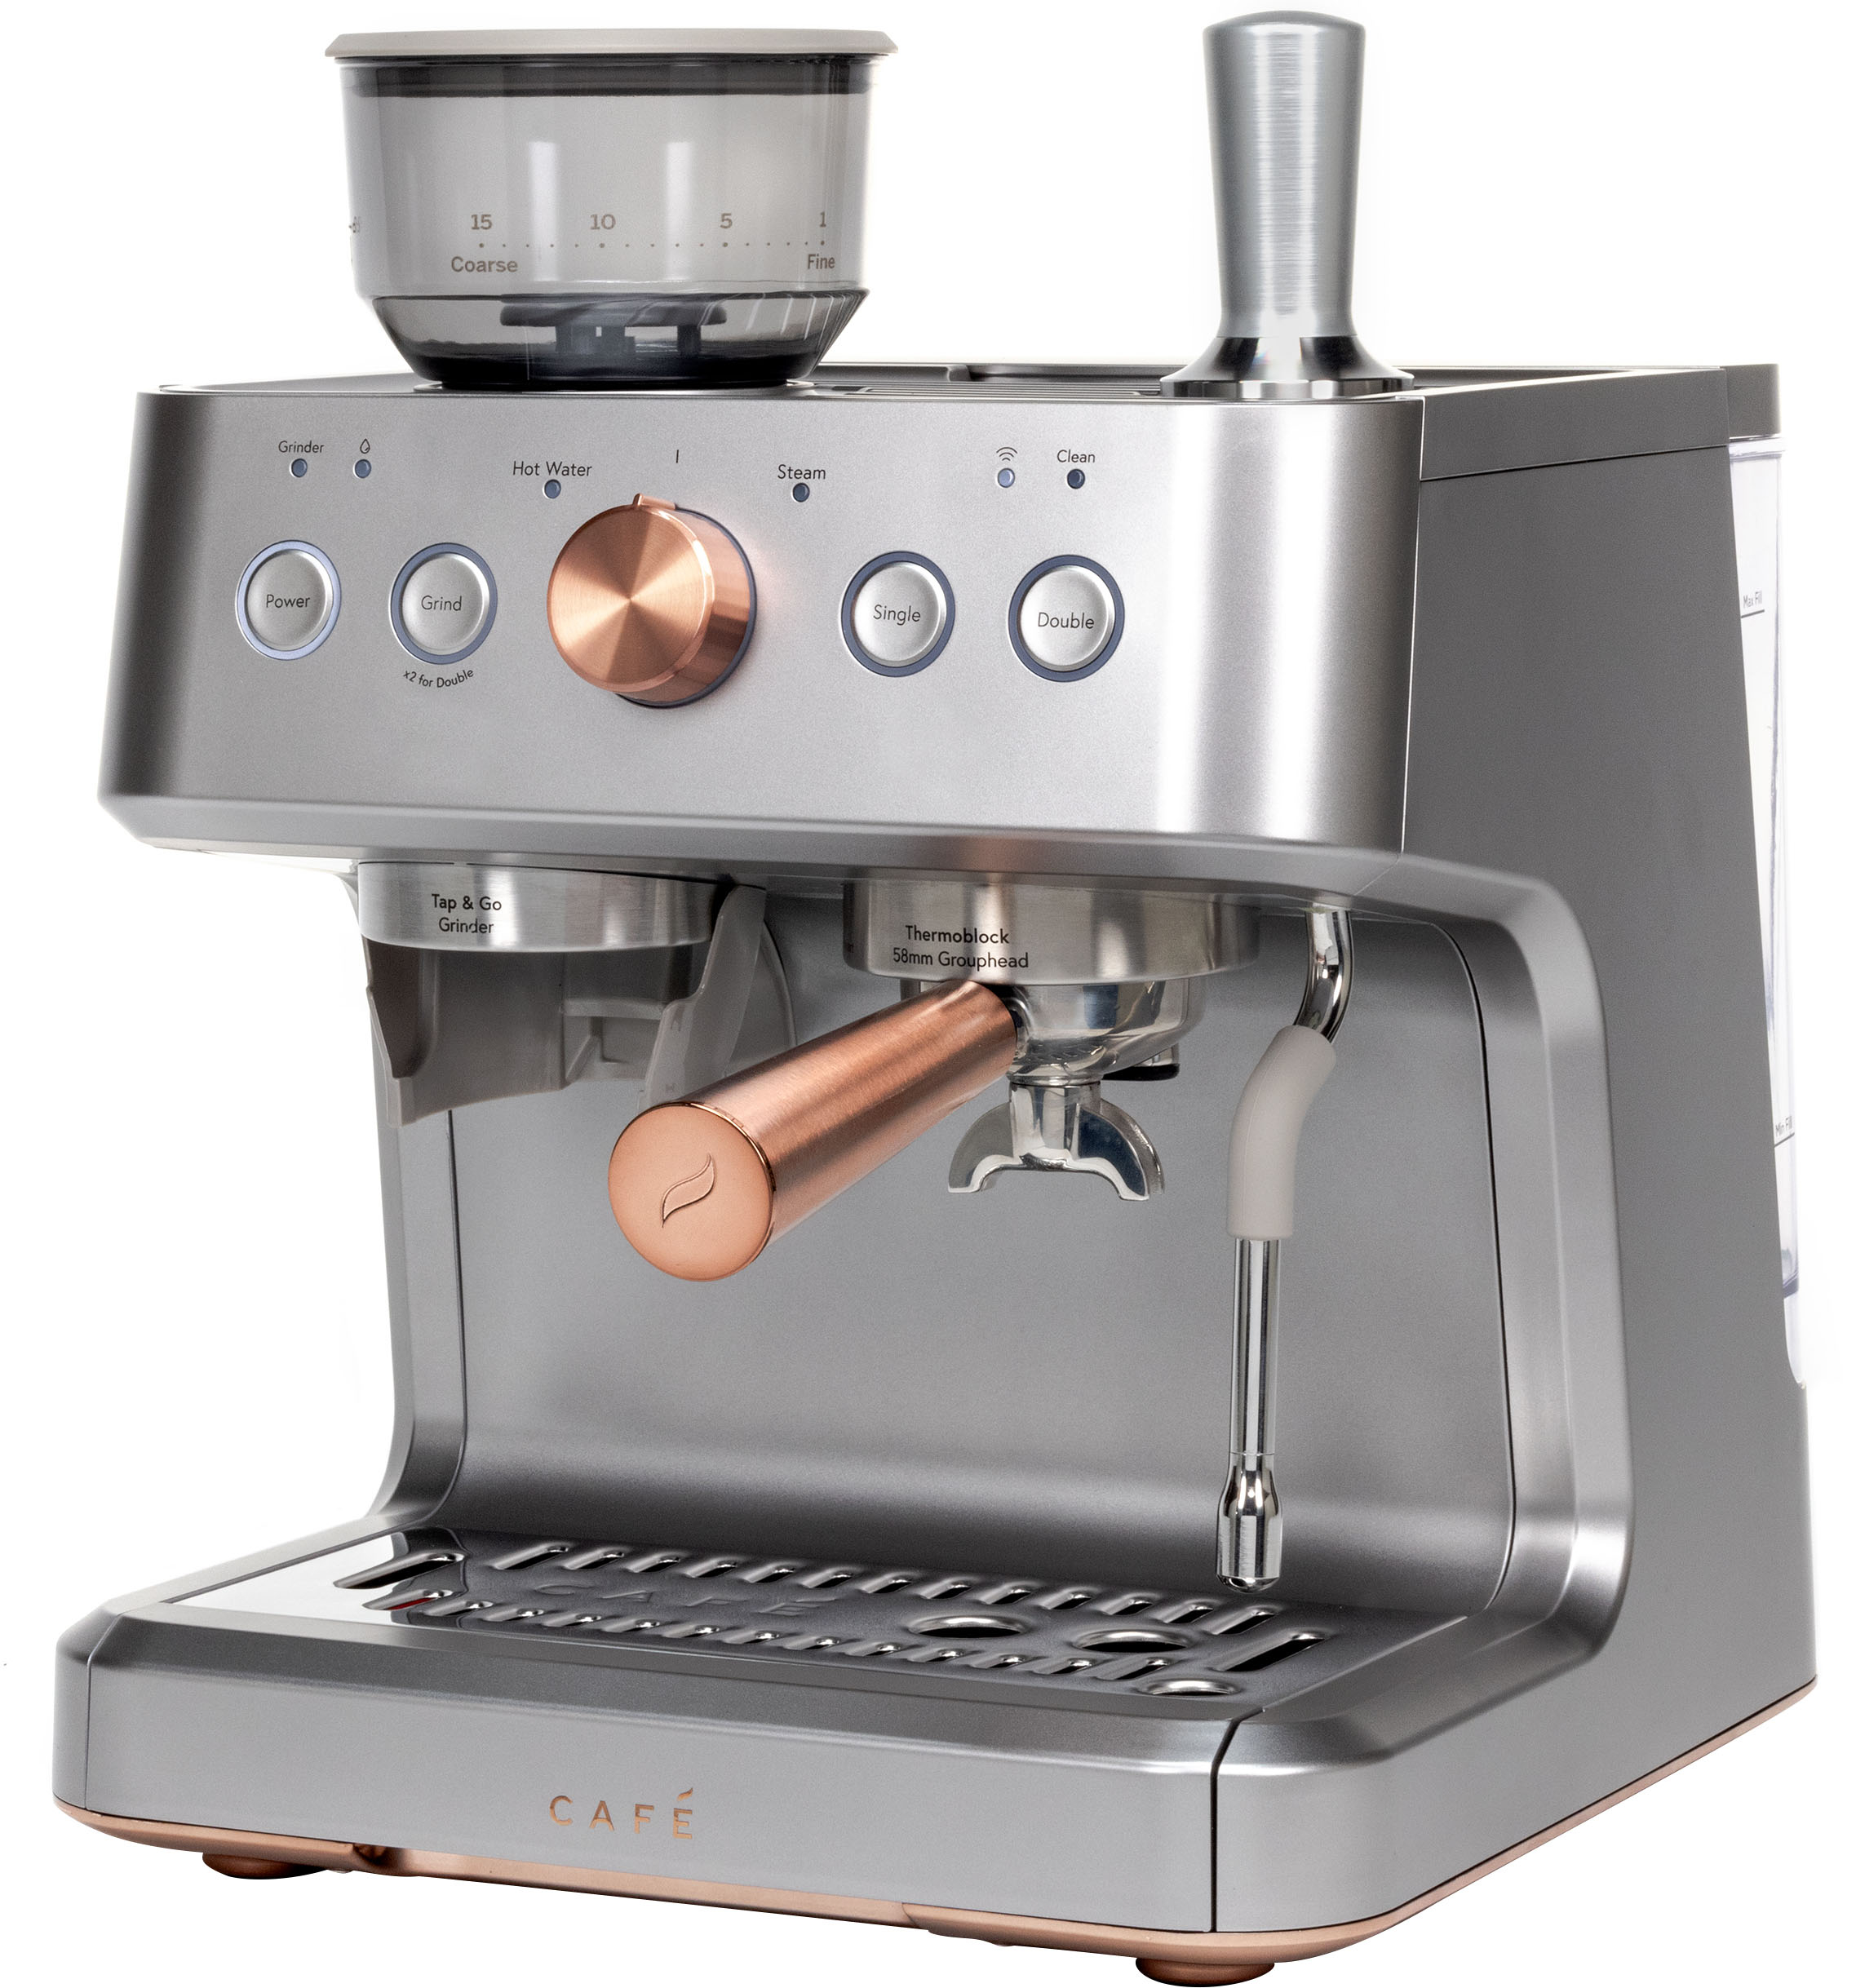 HIZLJJ Deluxe Coffee and Espresso Machine,Auto Frother for Lattes and  Cappuccinos Semi-Automatic Home Coffee Machine Small Steam Coffee Machine